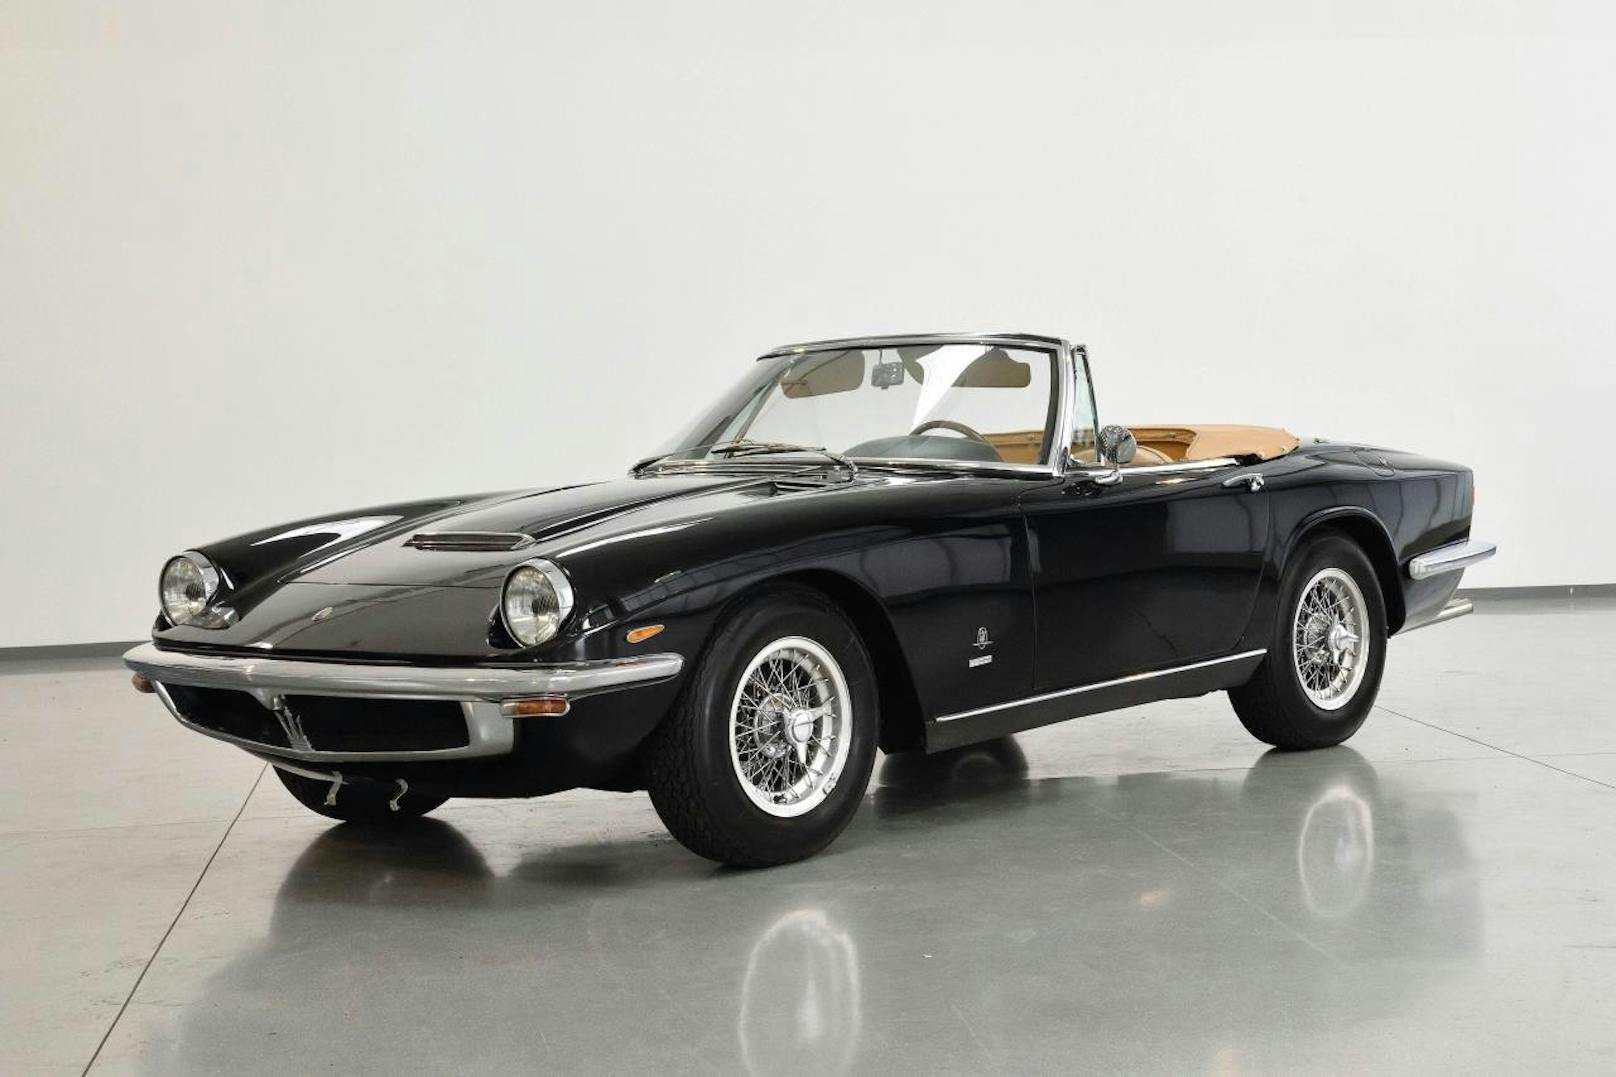 1966 Maserati Mistral Spyder 3700;
Laufleistung: 58.122 km (abgelesen), Hubraum: 4.014 ccm/R6, Leistung: 255 PS, Getriebe: 5-Gang